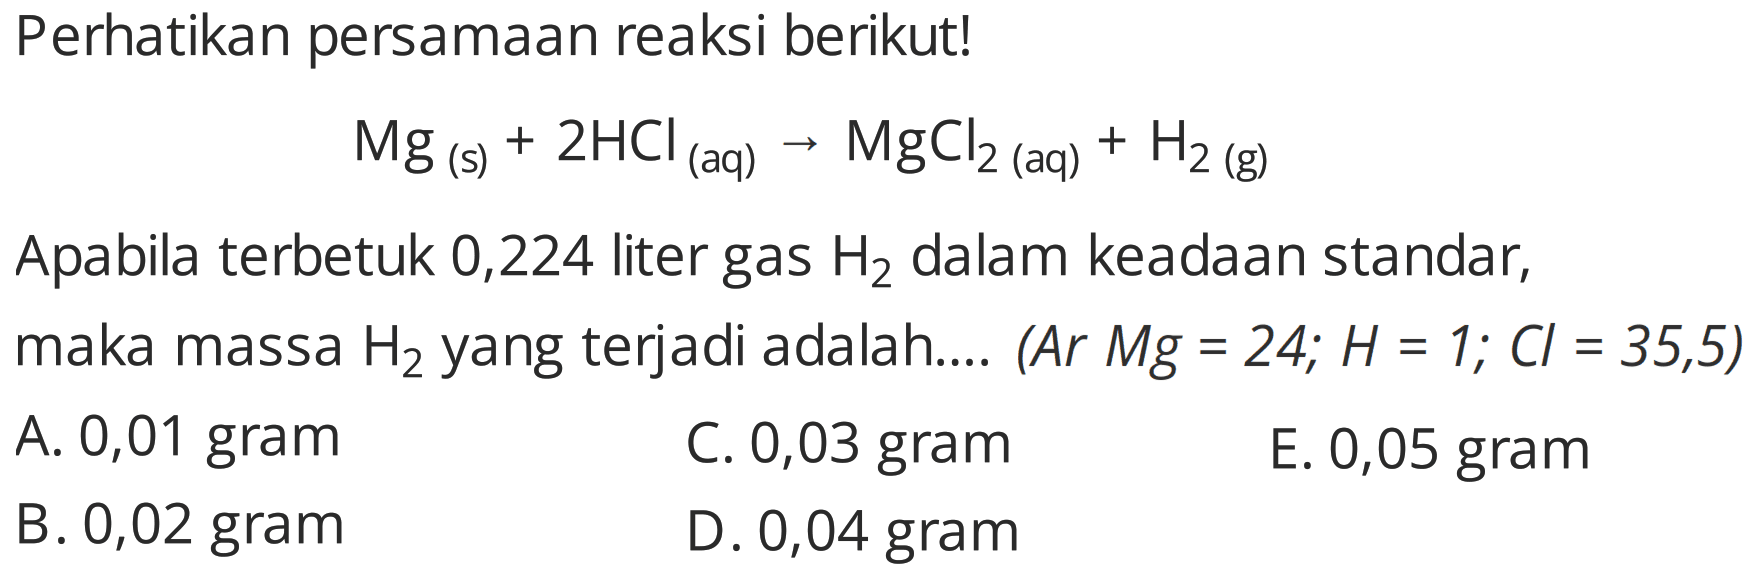 Perhatikan persamaan reaksi berikut!
 Mg(s)+2 HCl(aq) -> MgCl2(aq))+H2(g) 
Apabila terbetuk 0,224 liter gas  H2  dalam keadaan standar,
maka massa  H2  yang terjadi adalah....  (Ar Mg=24 ; H=1 ; Cl=35,5) 
A. 0,01 gram
C. 0,03 gram
E. 0,05 gram
B. 0,02 gram
D. 0,04 gram